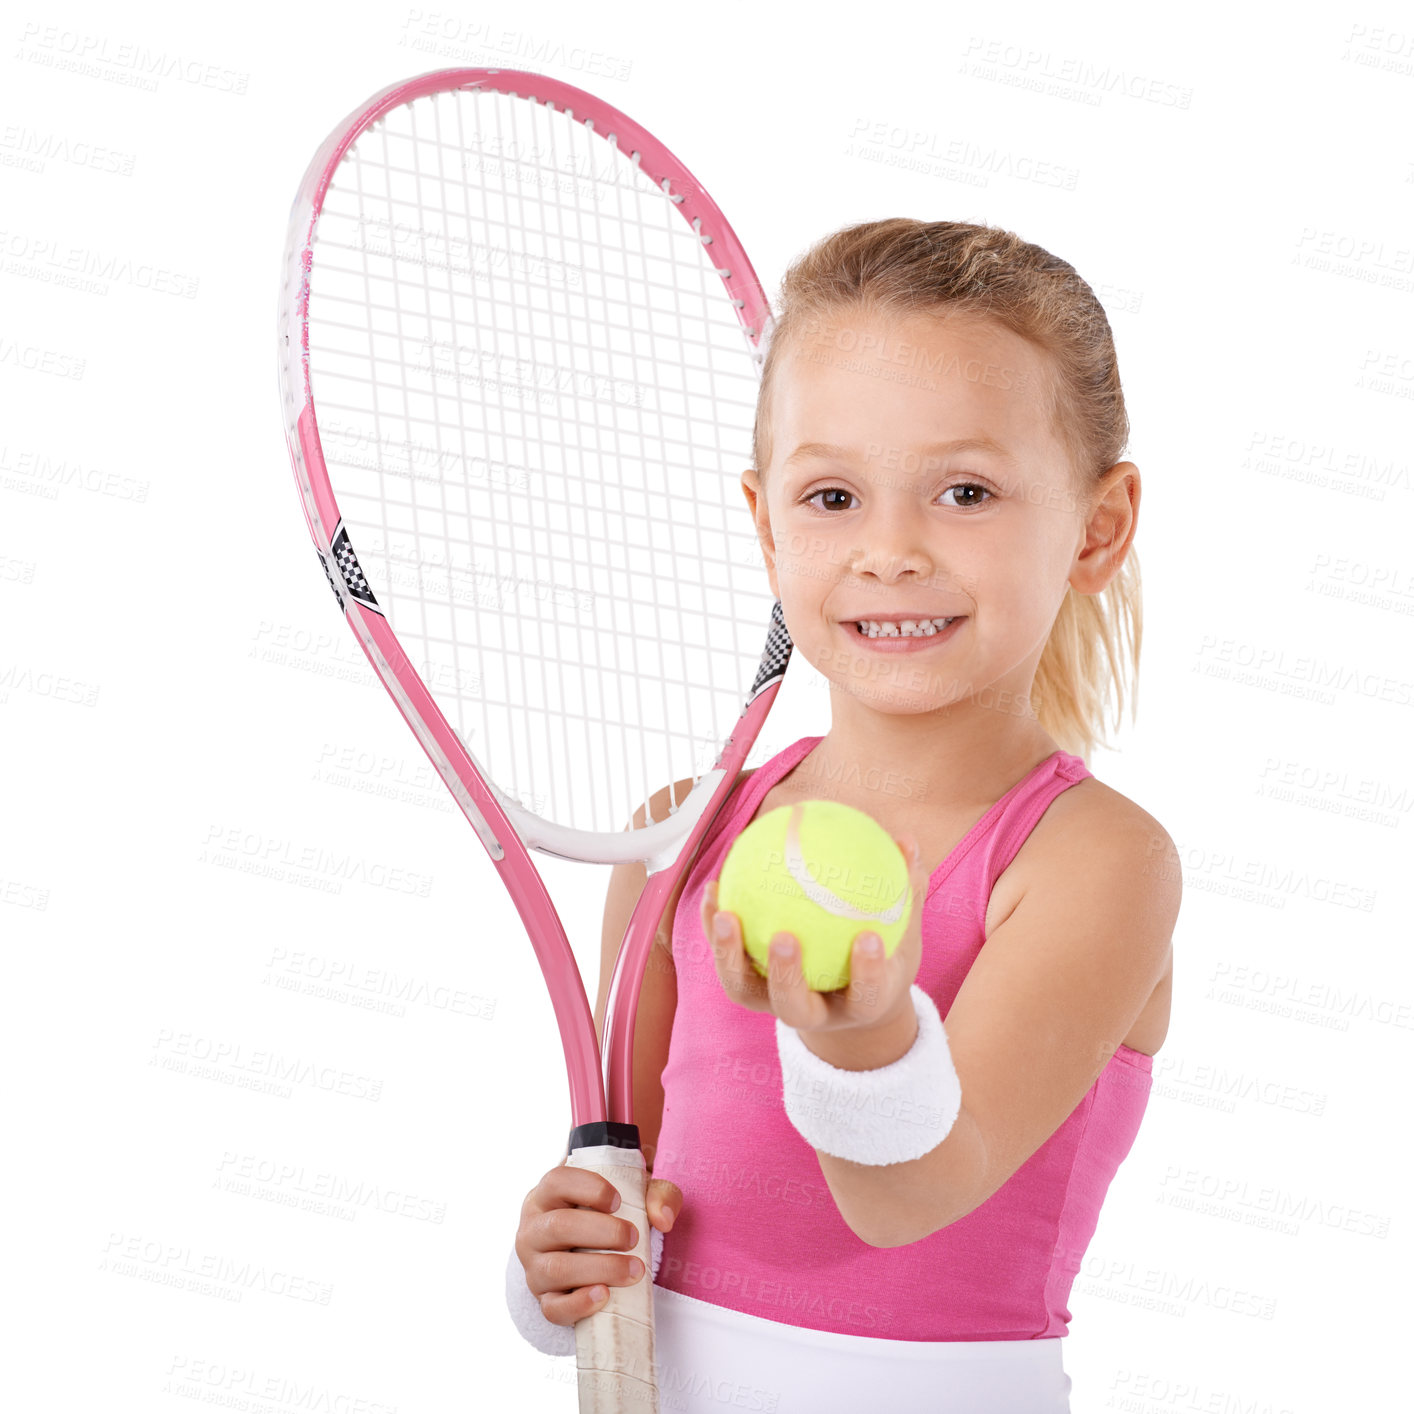 Buy stock photo Portrait of a cute little girl in tennis attire